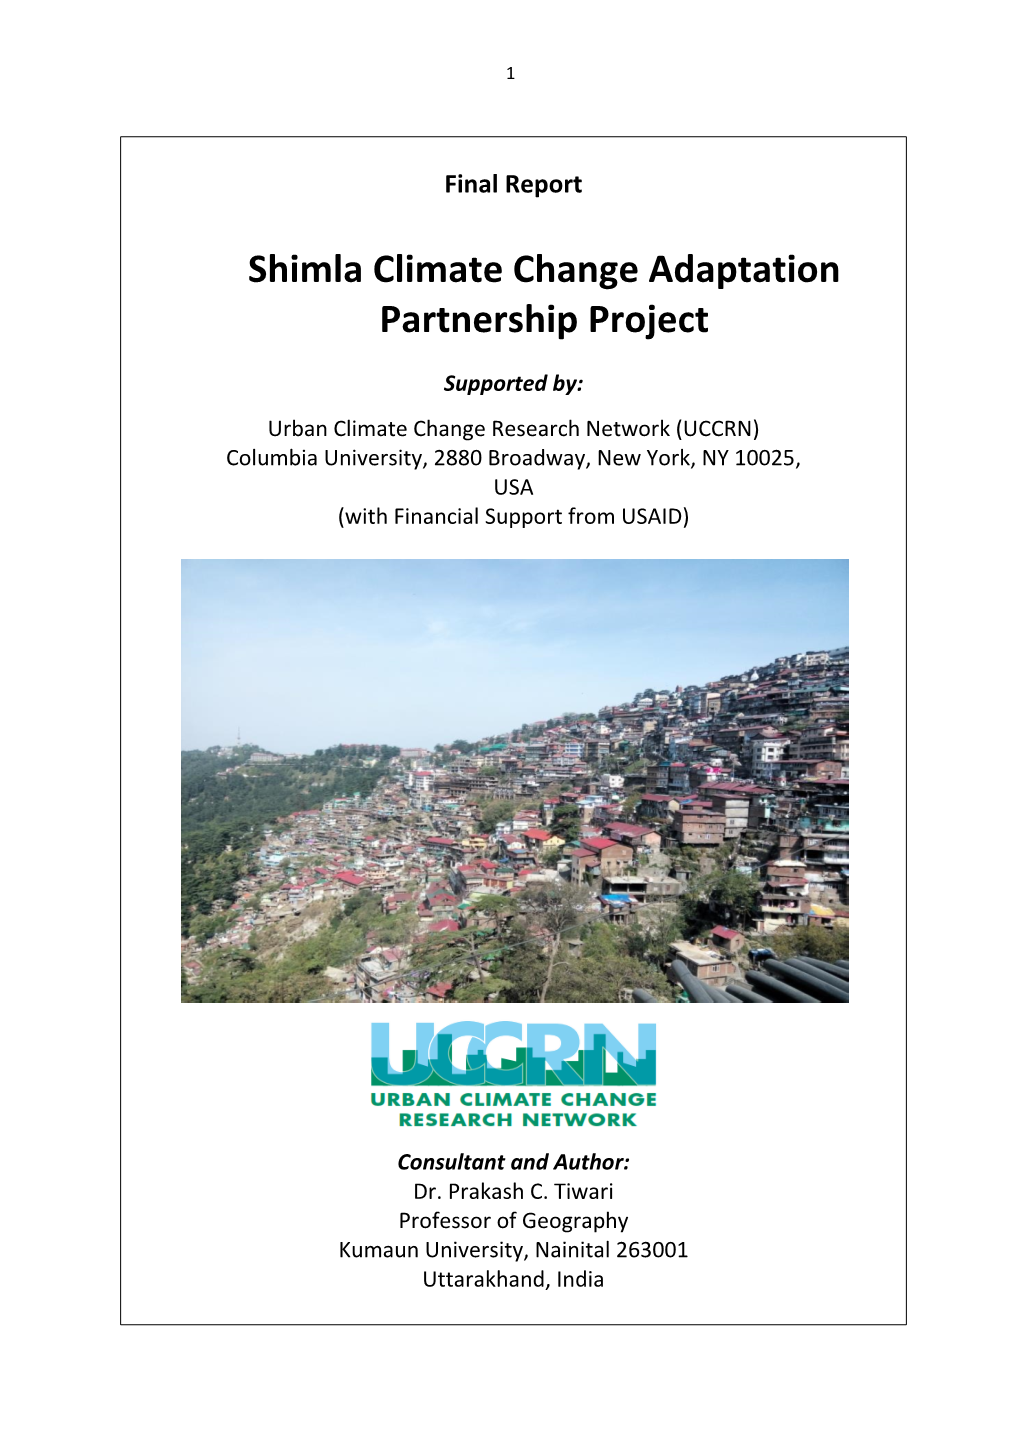 Shimla Climate Change Adaptation Partnership Project